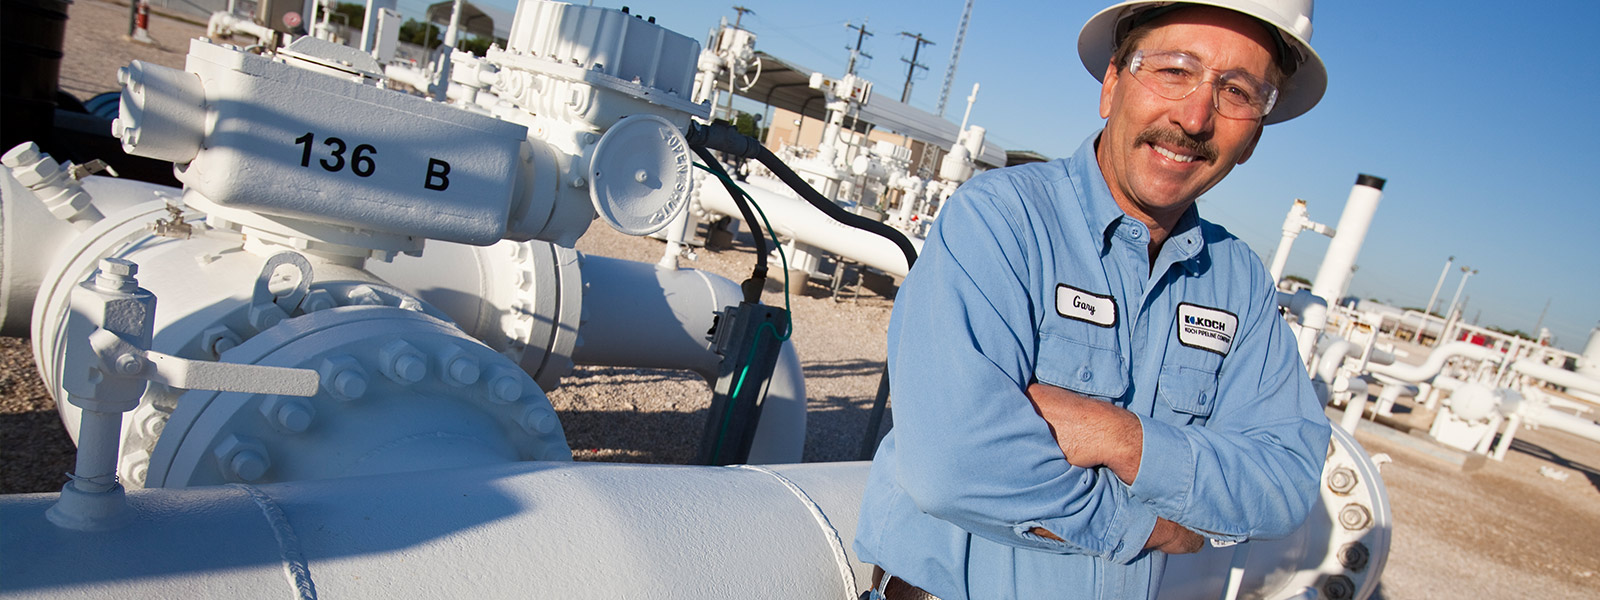 Koch Pipeline Company To Begin Building 16-Inch Crude Oil Pipeline in Texas